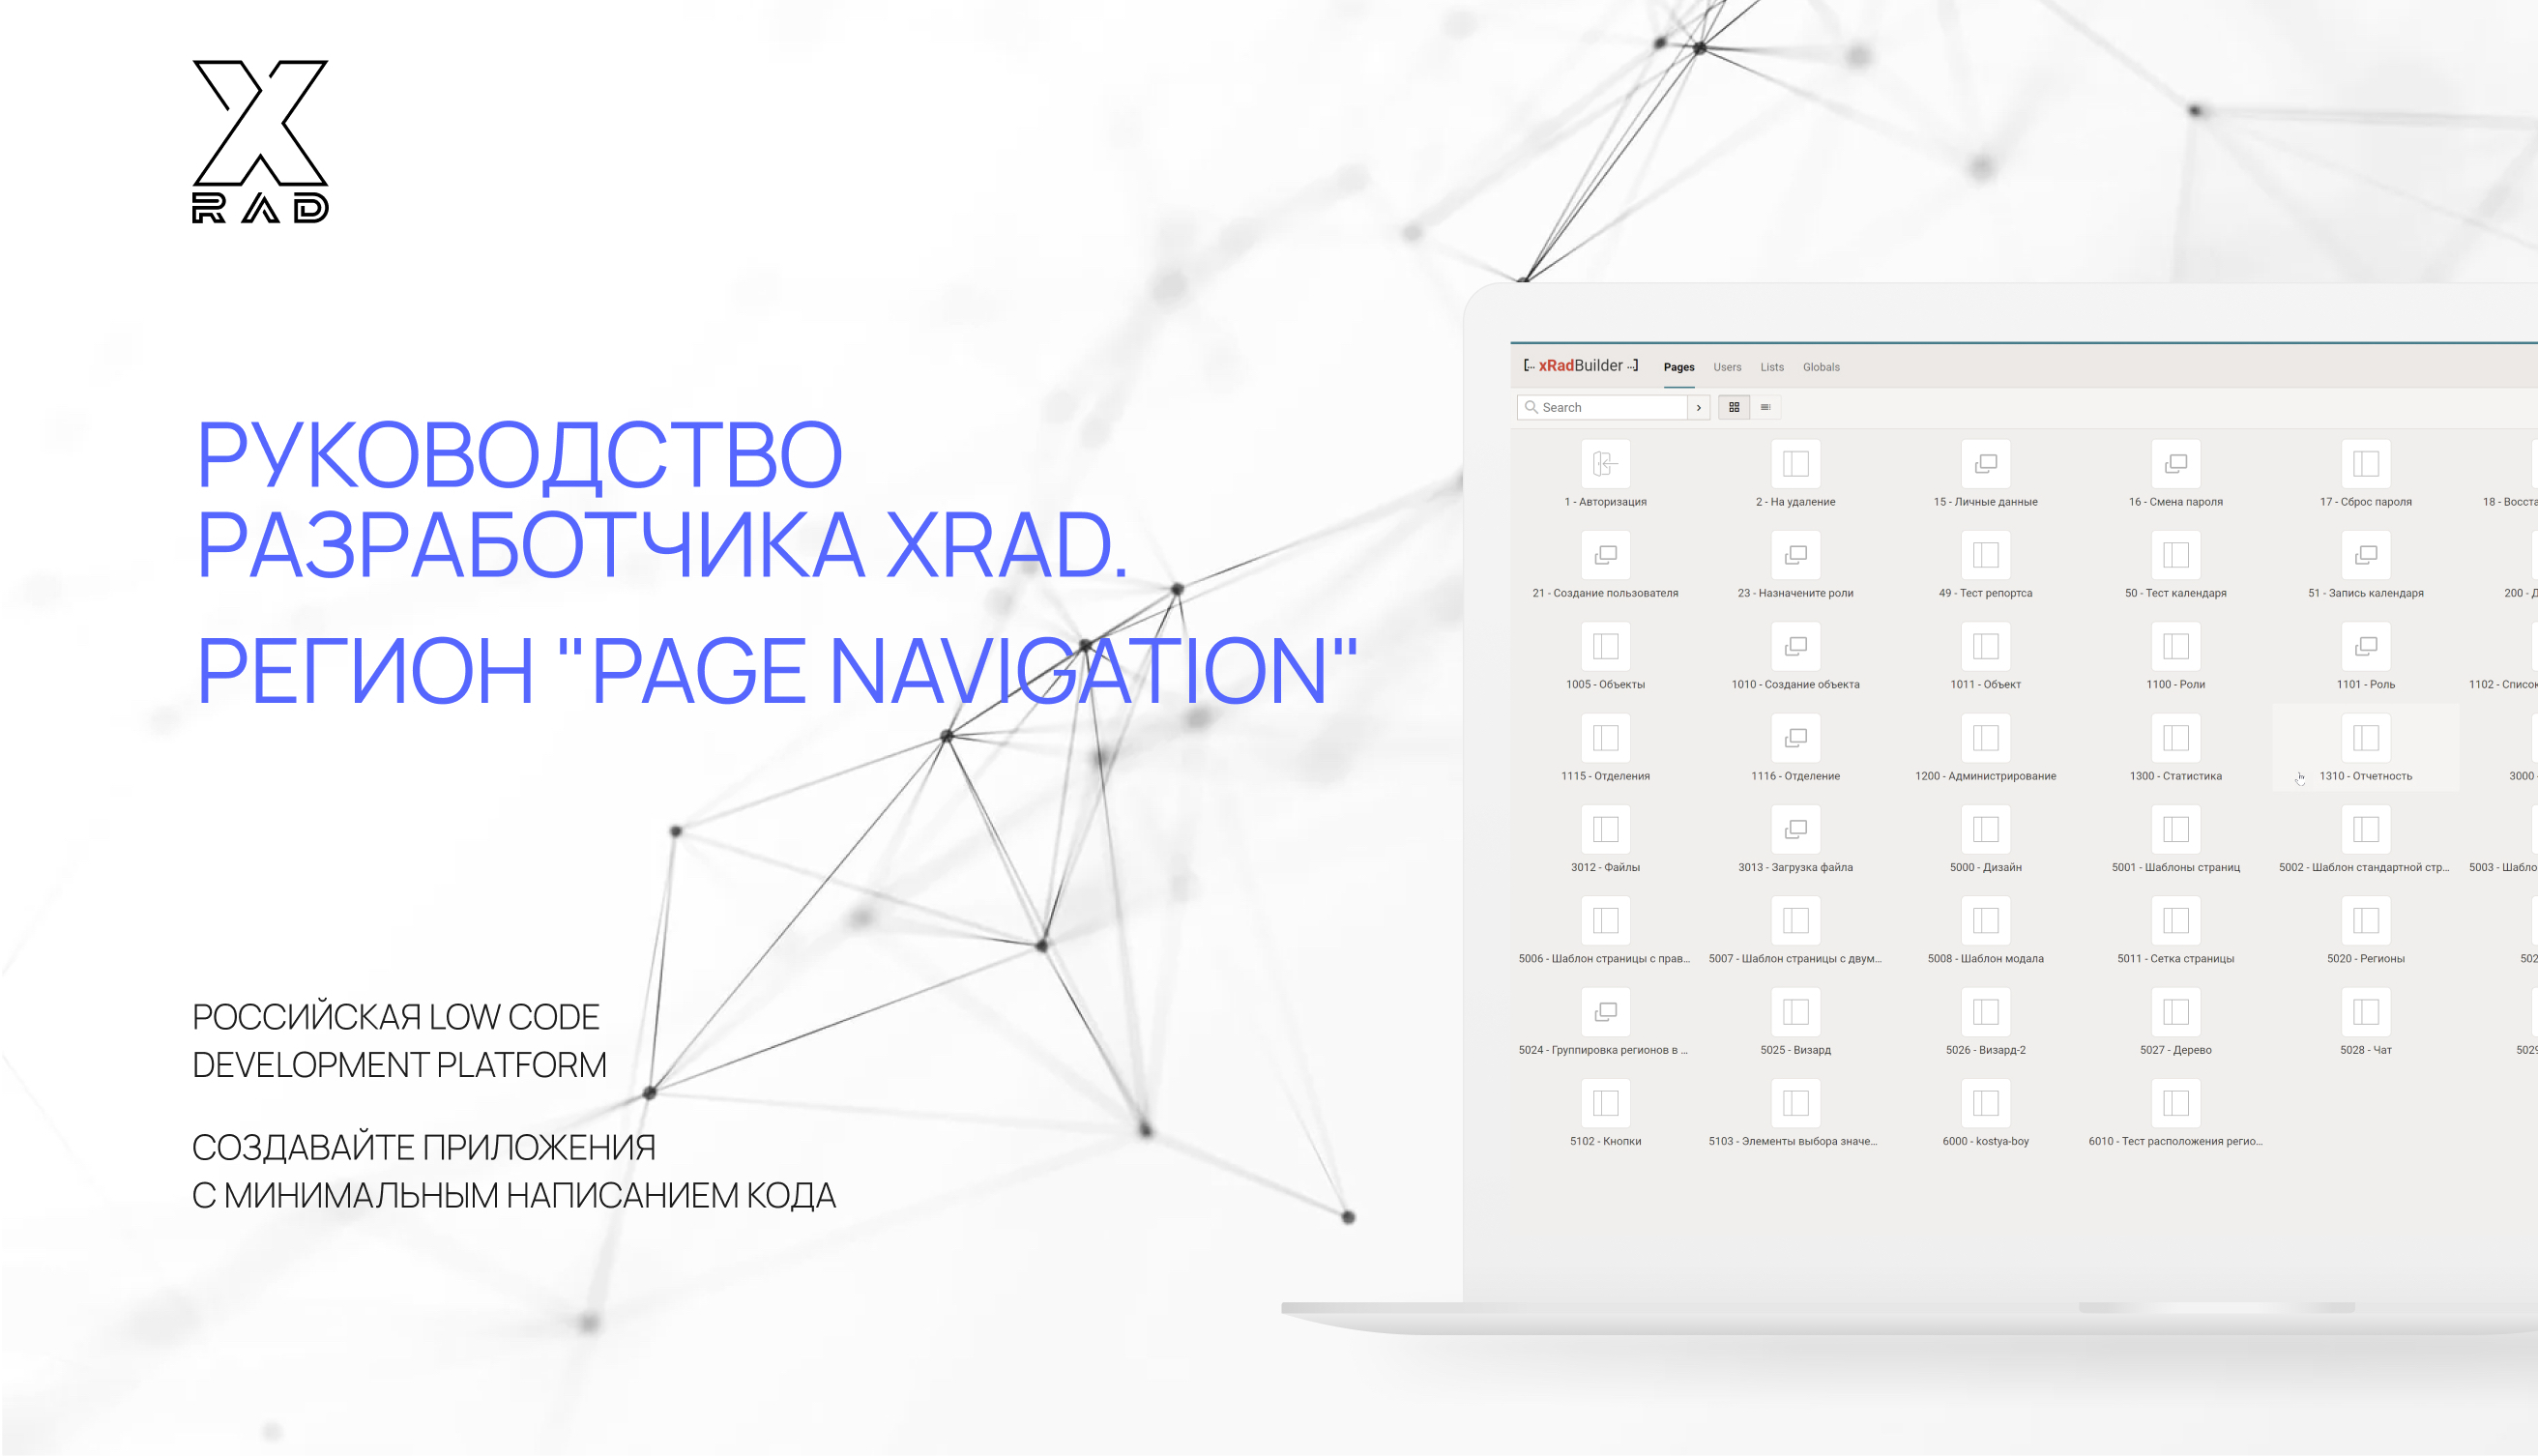 Руководство разработчика XRAD.  Регион "Page Navigation".